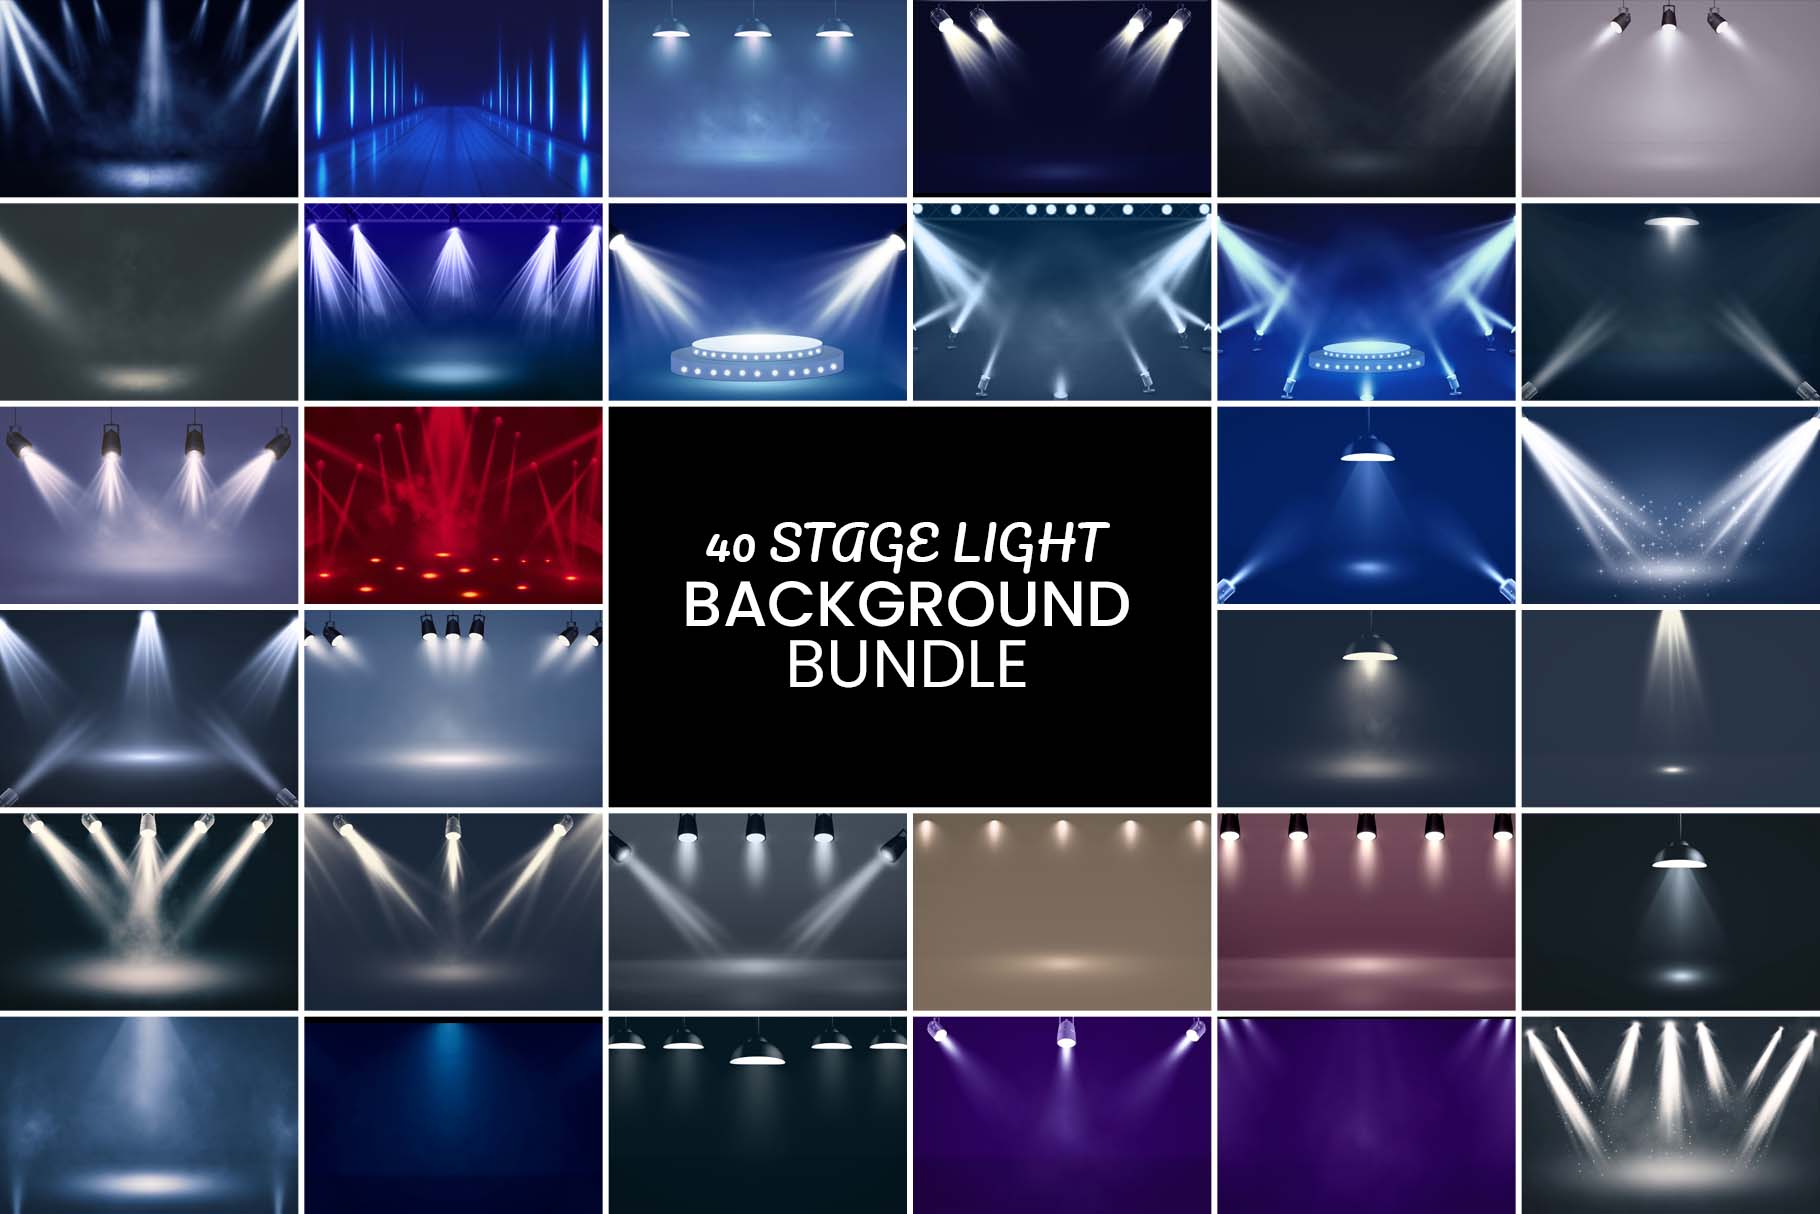 40 Stage Light Background Bundle